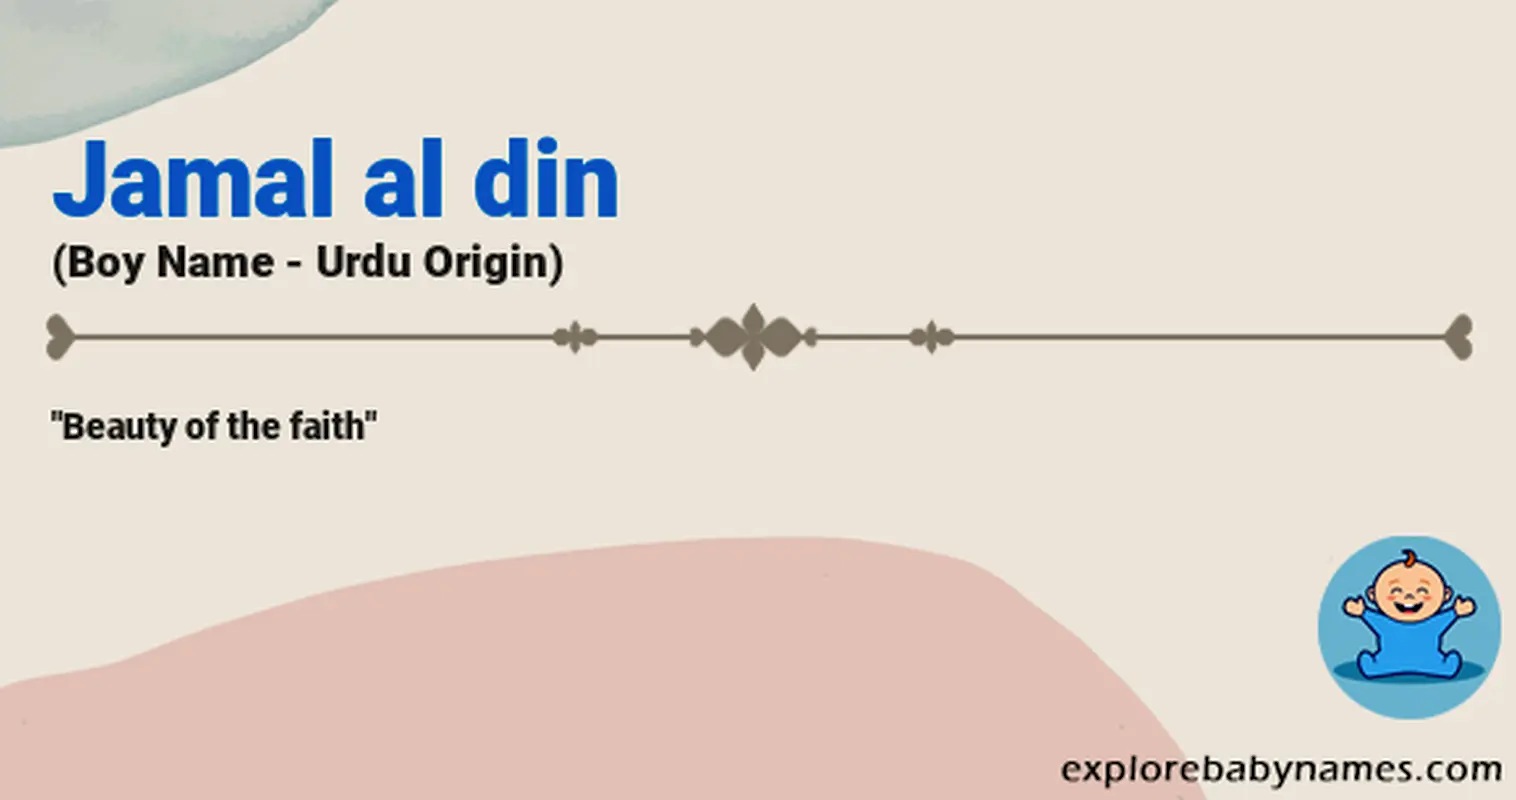 Meaning of Jamal al din